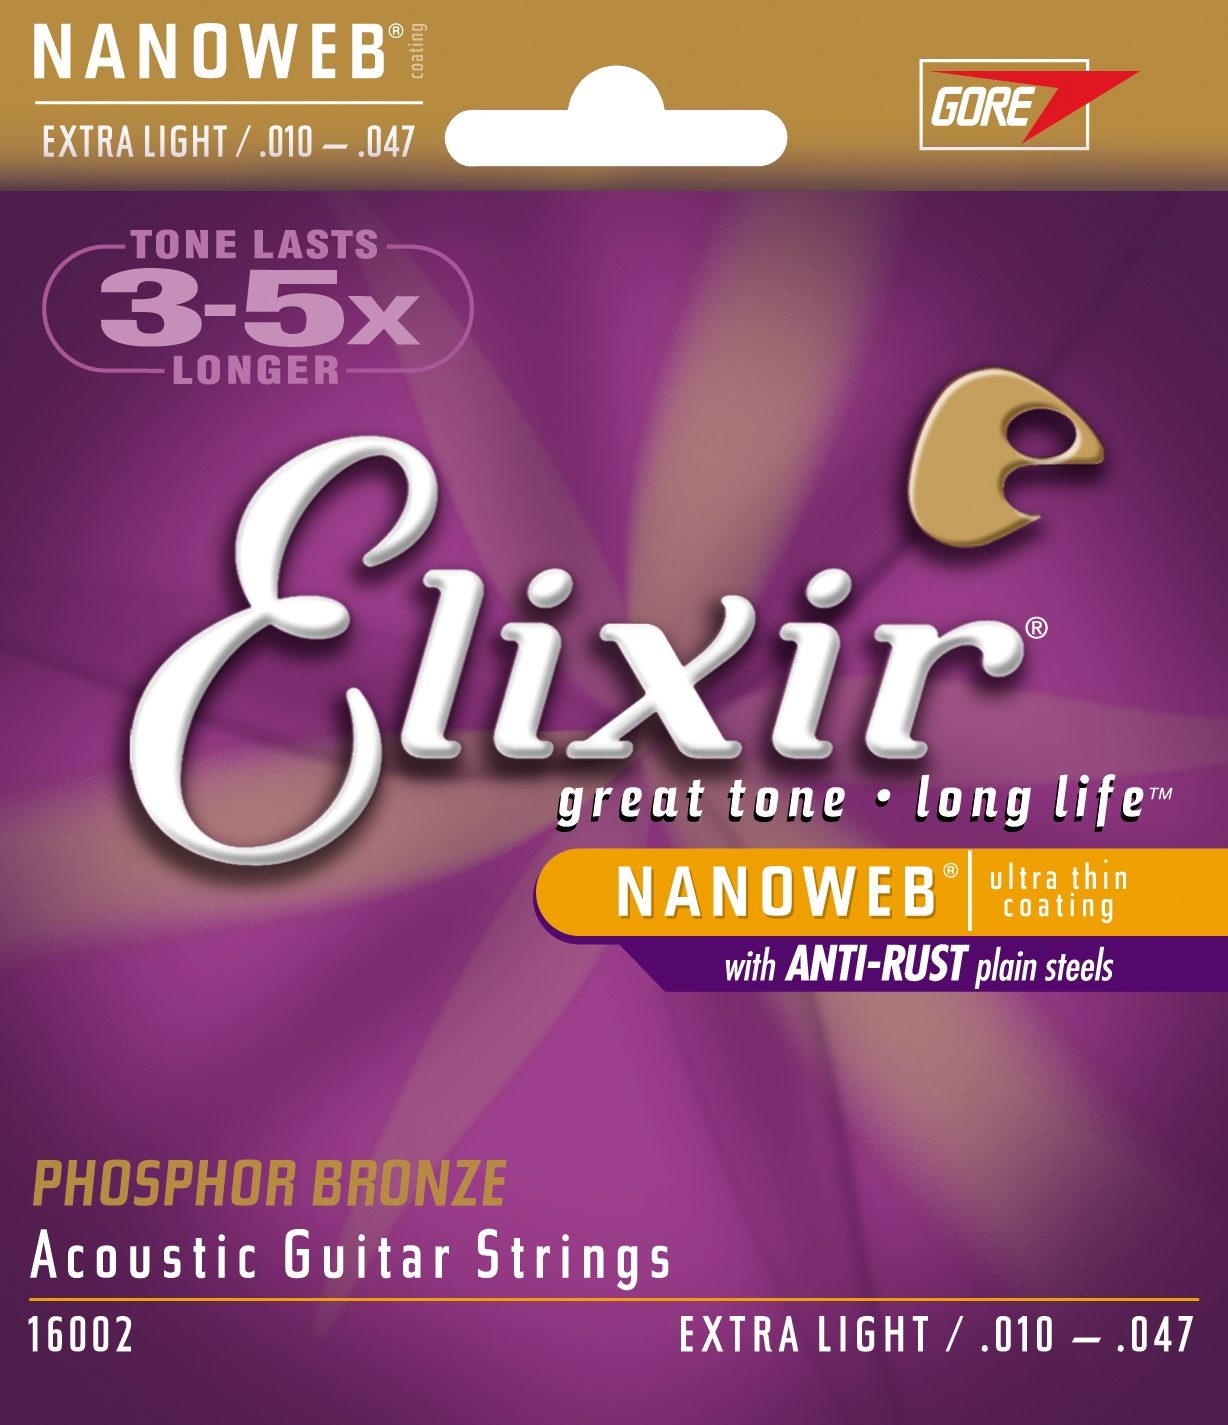 Elixir 16002 Strings Phosphor Bronze Acoustic Guitar Strings w NANOWEB Coating .010-.047 Extra Light